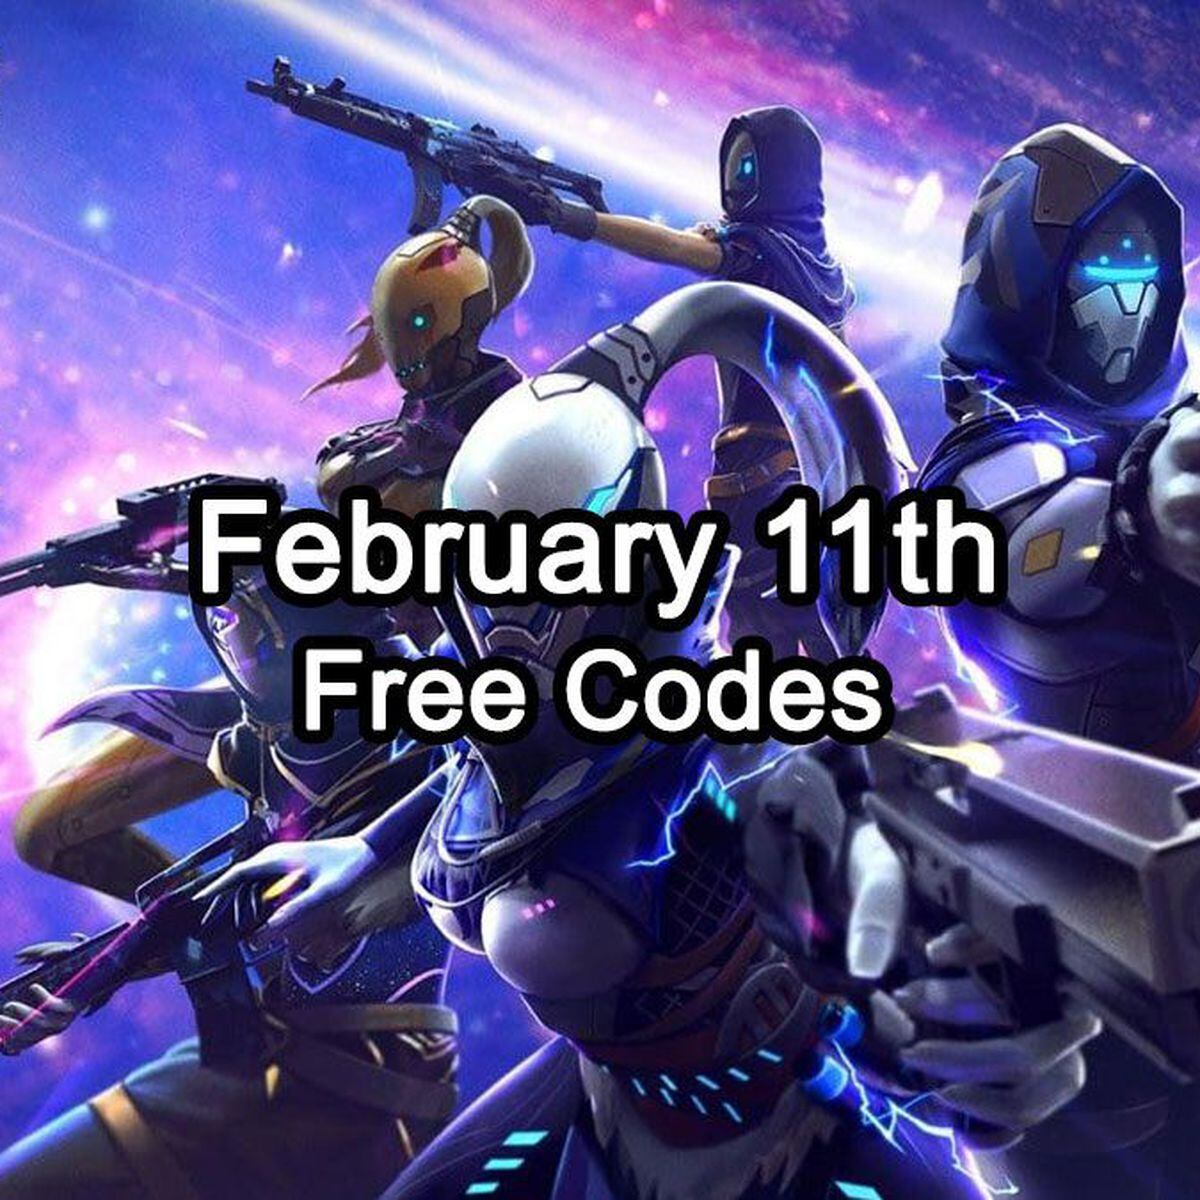 Garena Free Fire redeem codes for February 10, 2022; all rewards